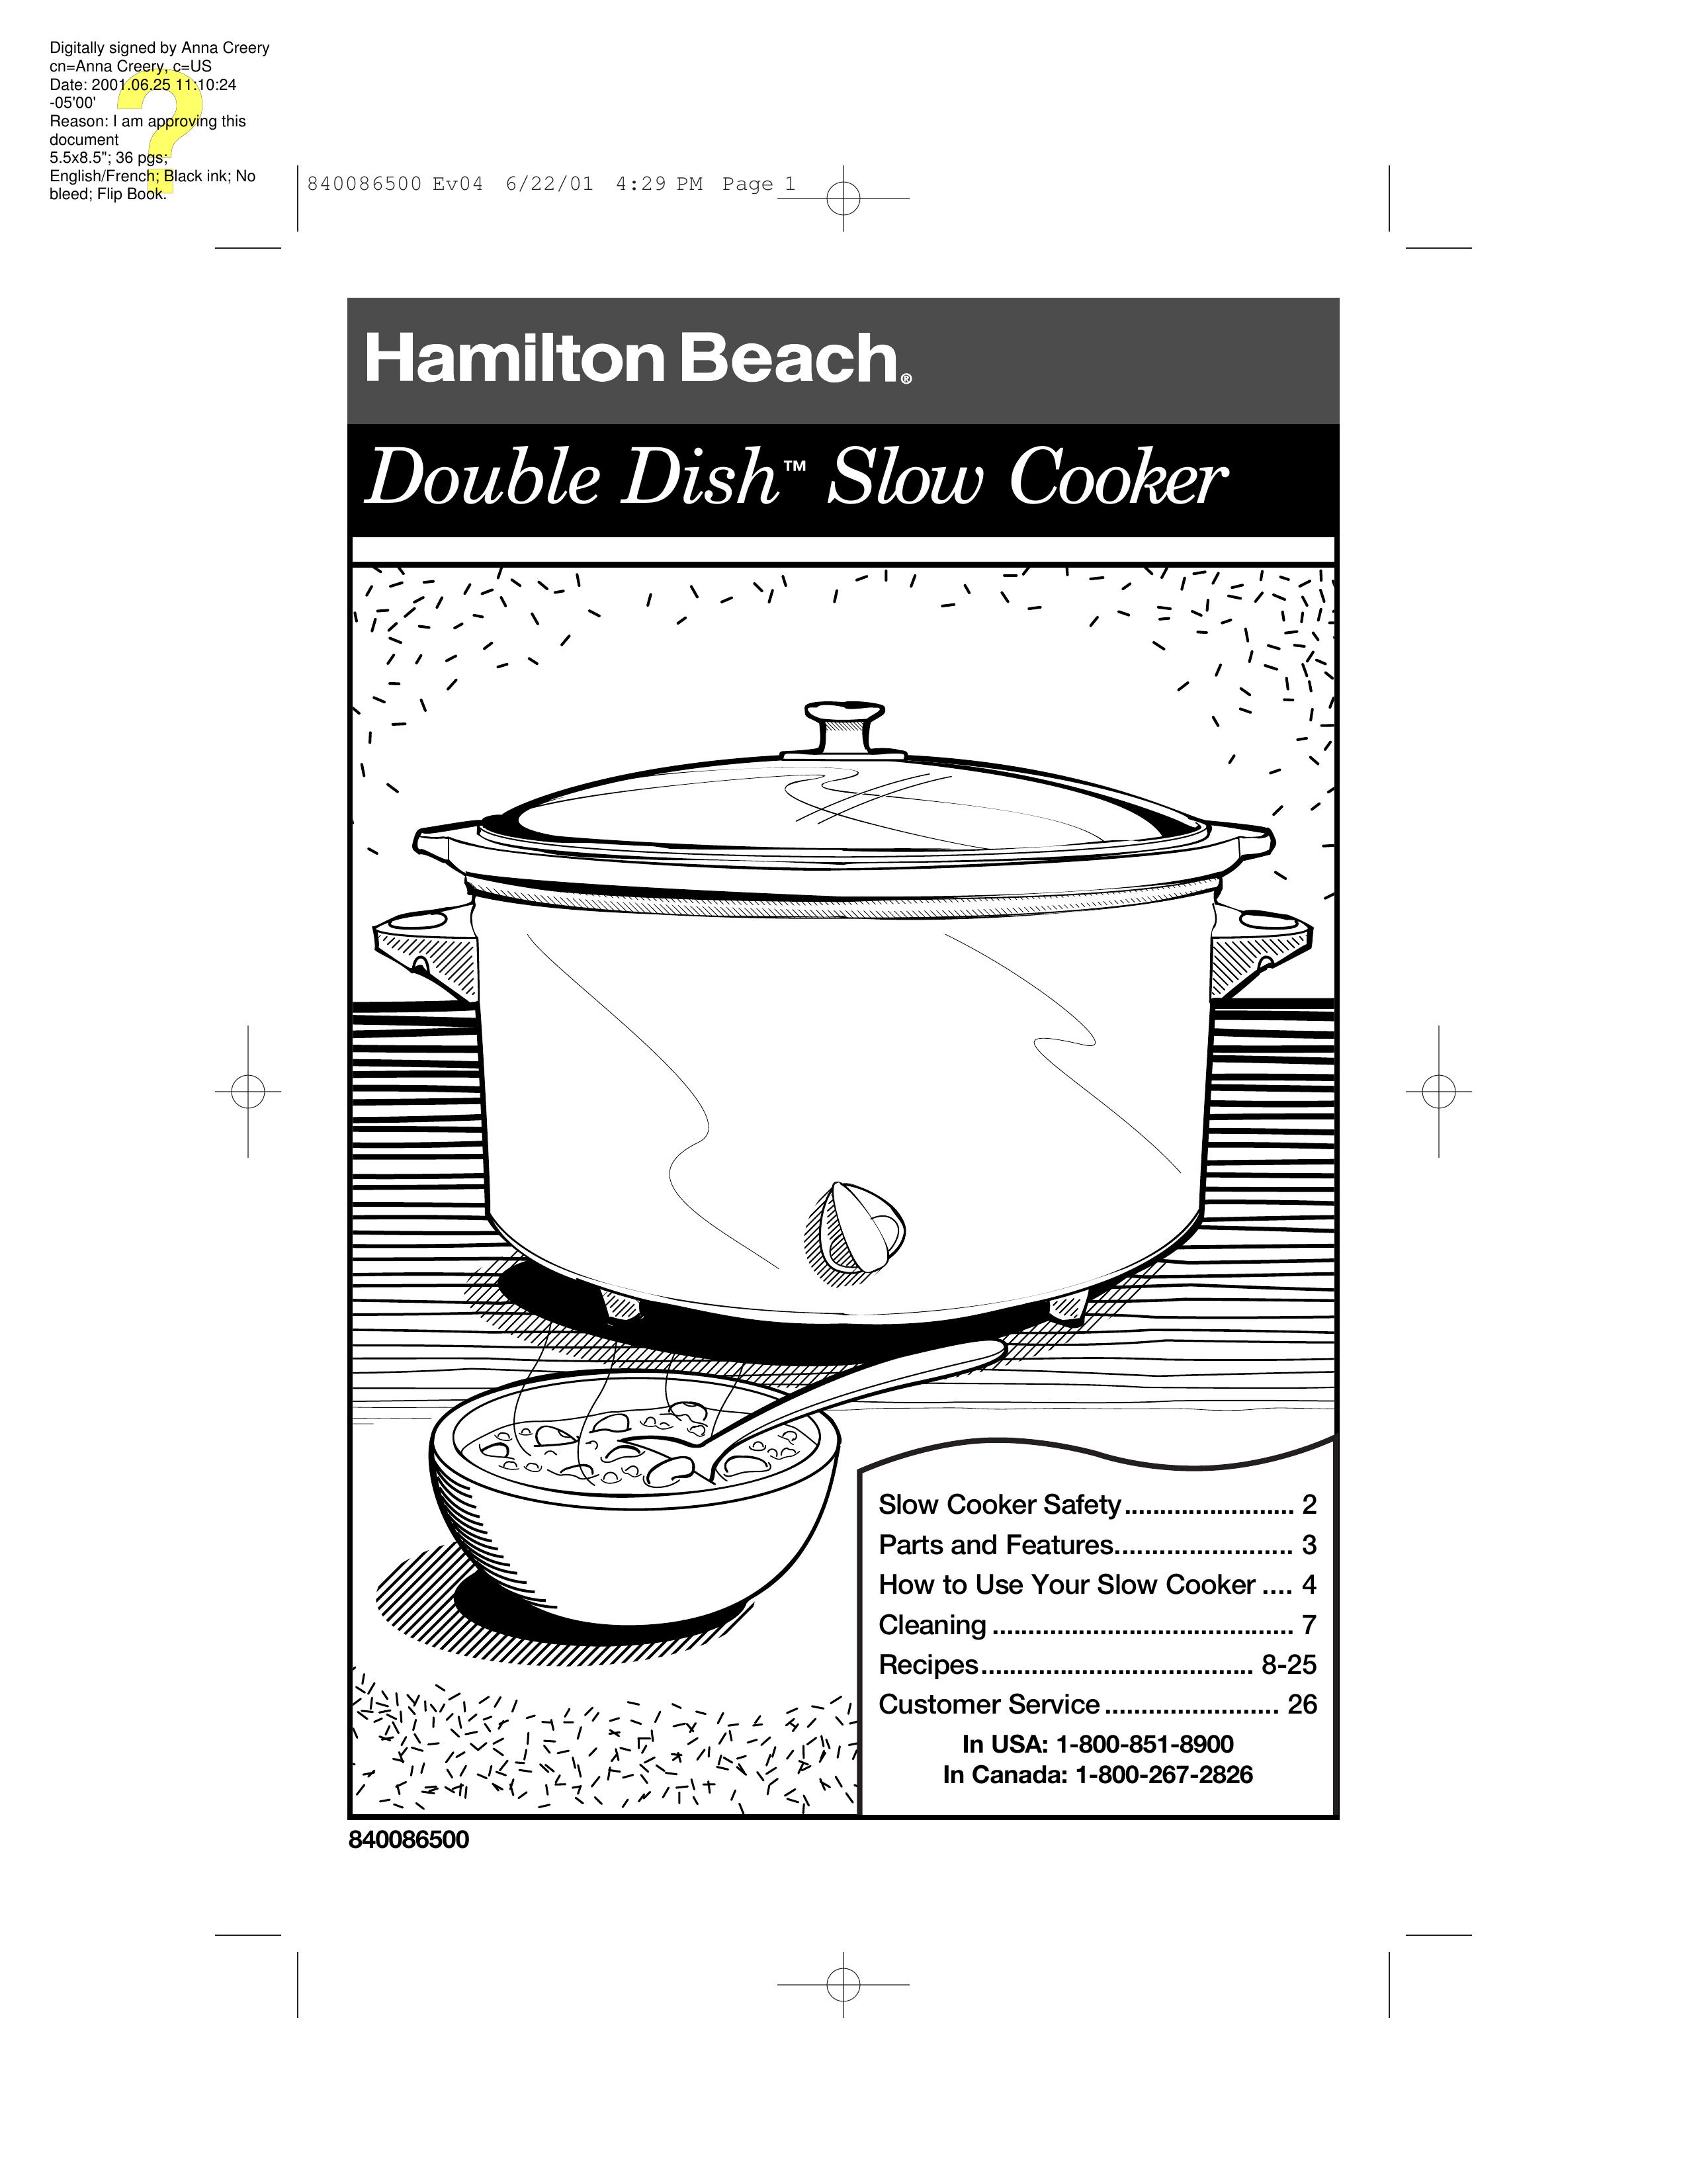 Hamilton Beach 33158 Slow Cooker User Manual